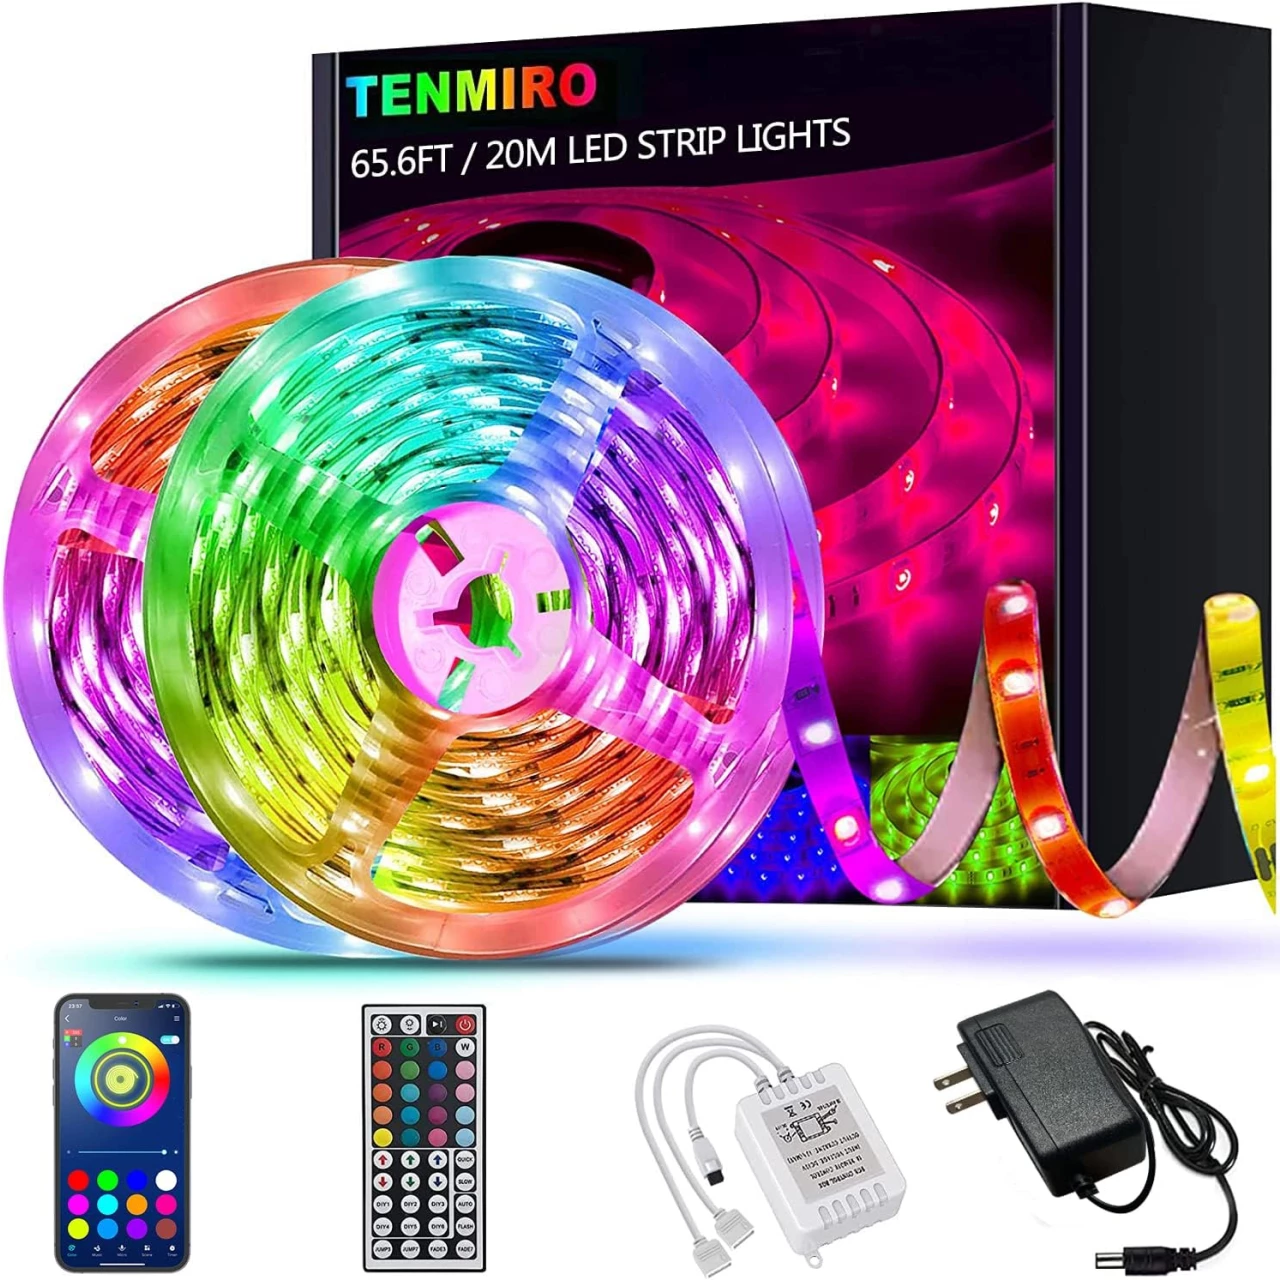 Tenmiro 65.6ft Led Strip Lights, Ultra Long RGB 5050 Color Changing LED Light Strips Kit